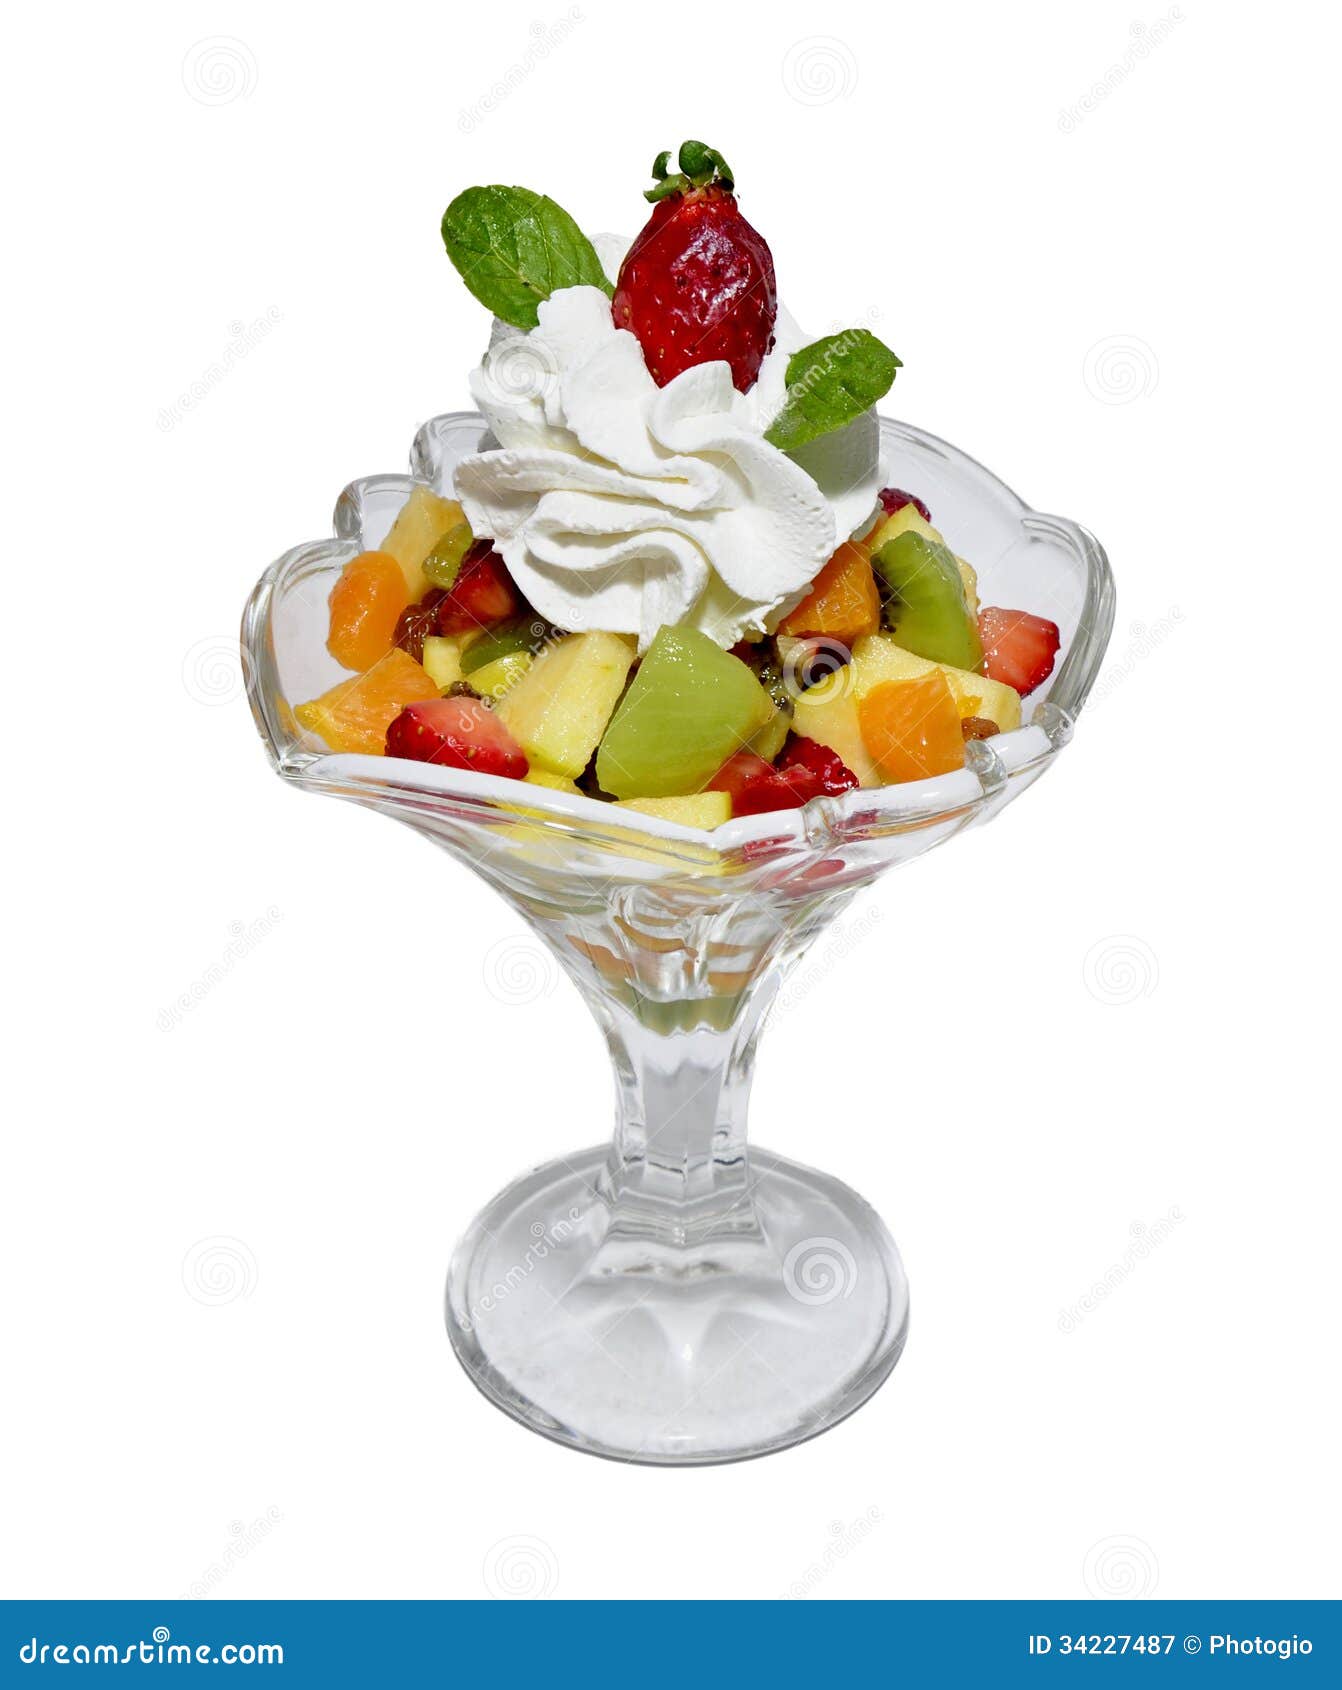 https://thumbs.dreamstime.com/z/fruit-salad-cup-sliced-34227487.jpg